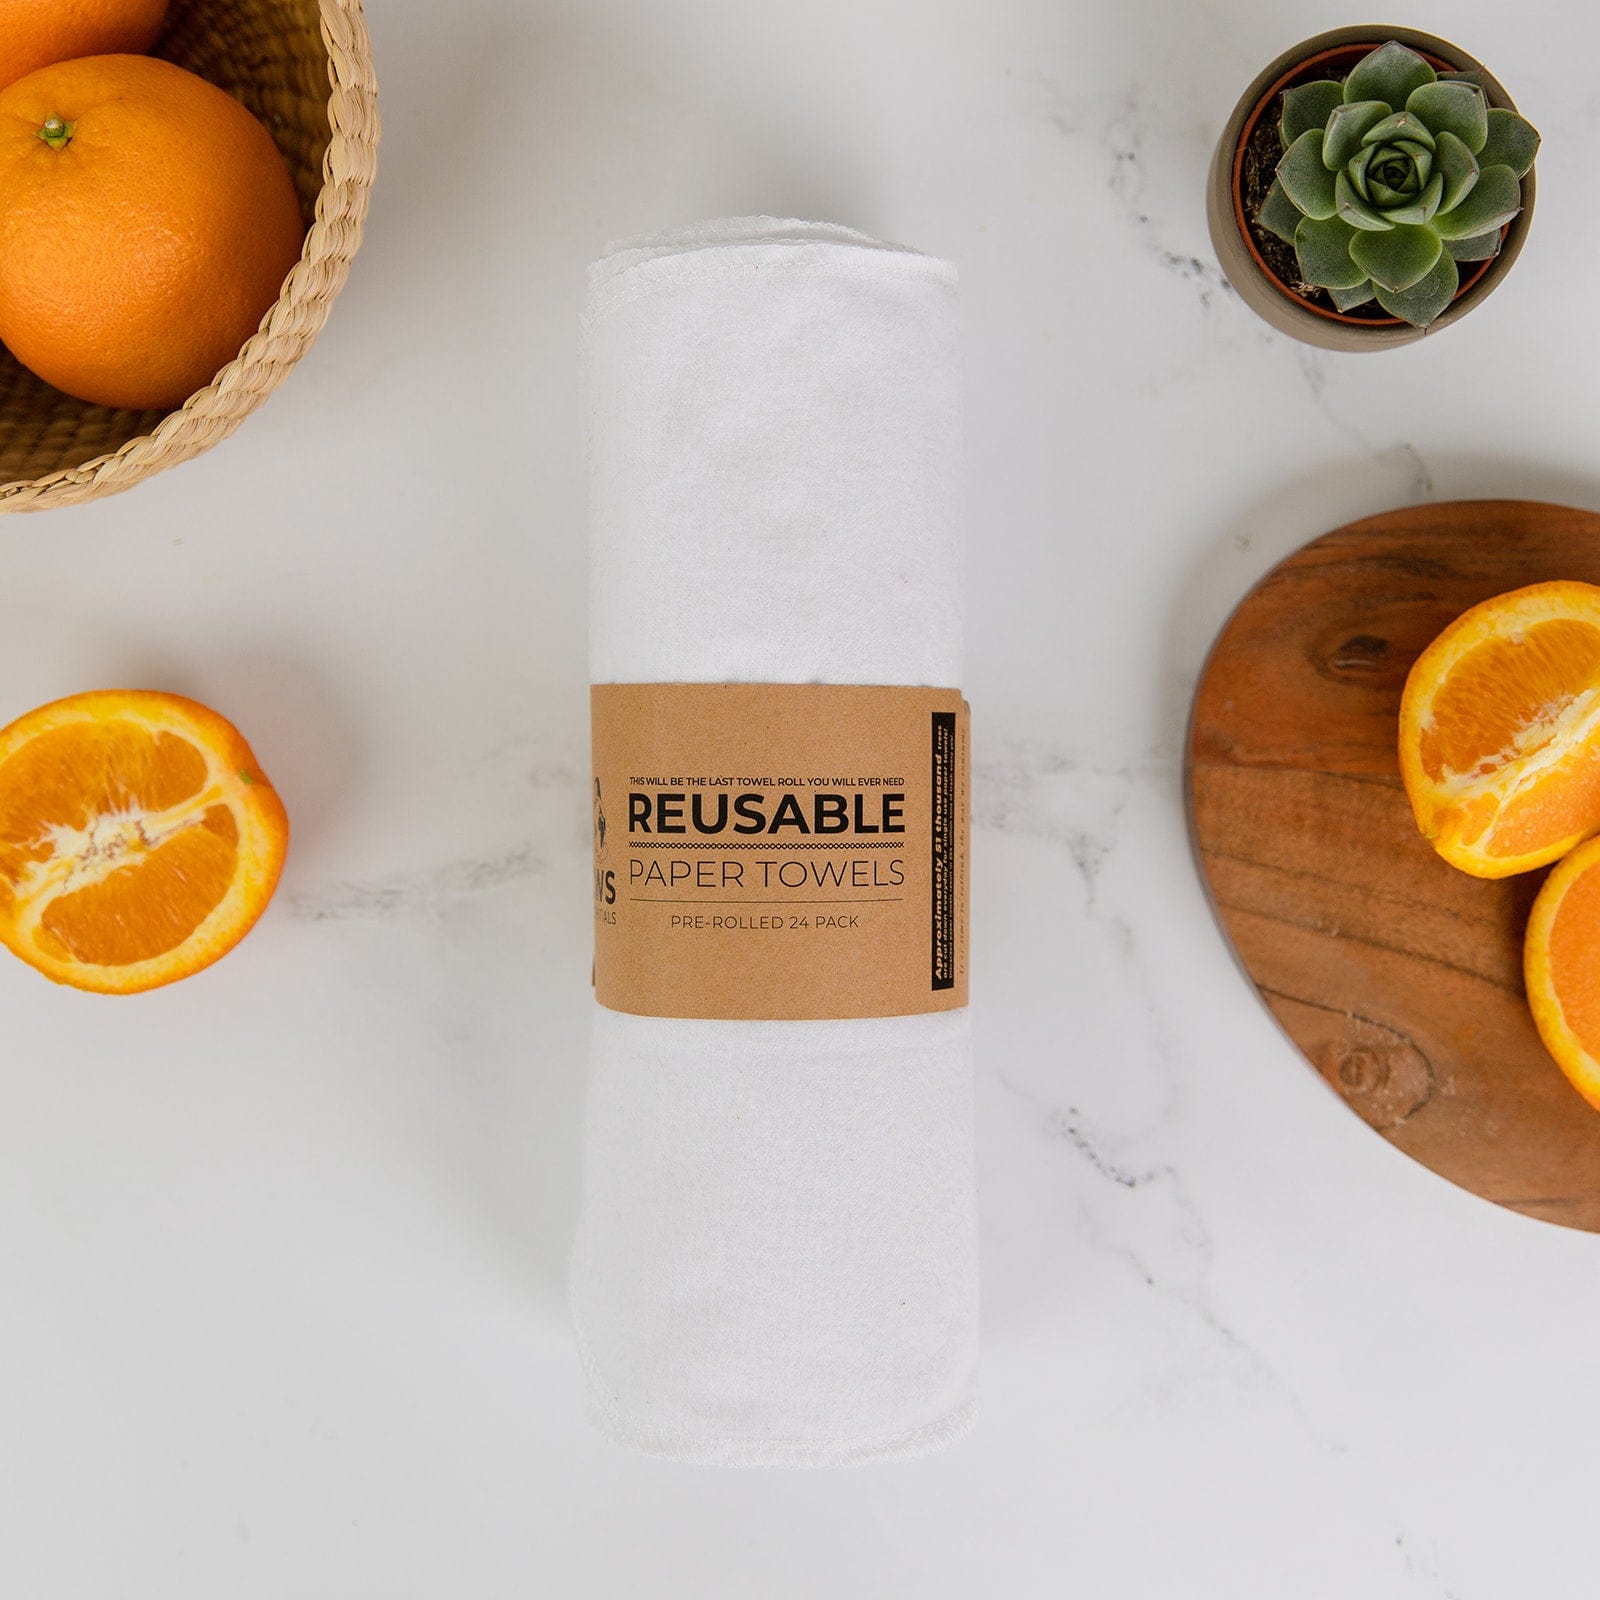 ZWS Essentials White Reusable Paper Towels - UnPaper Towels, Pre-Rolled , 100% Organic Cotton, 24 Pack